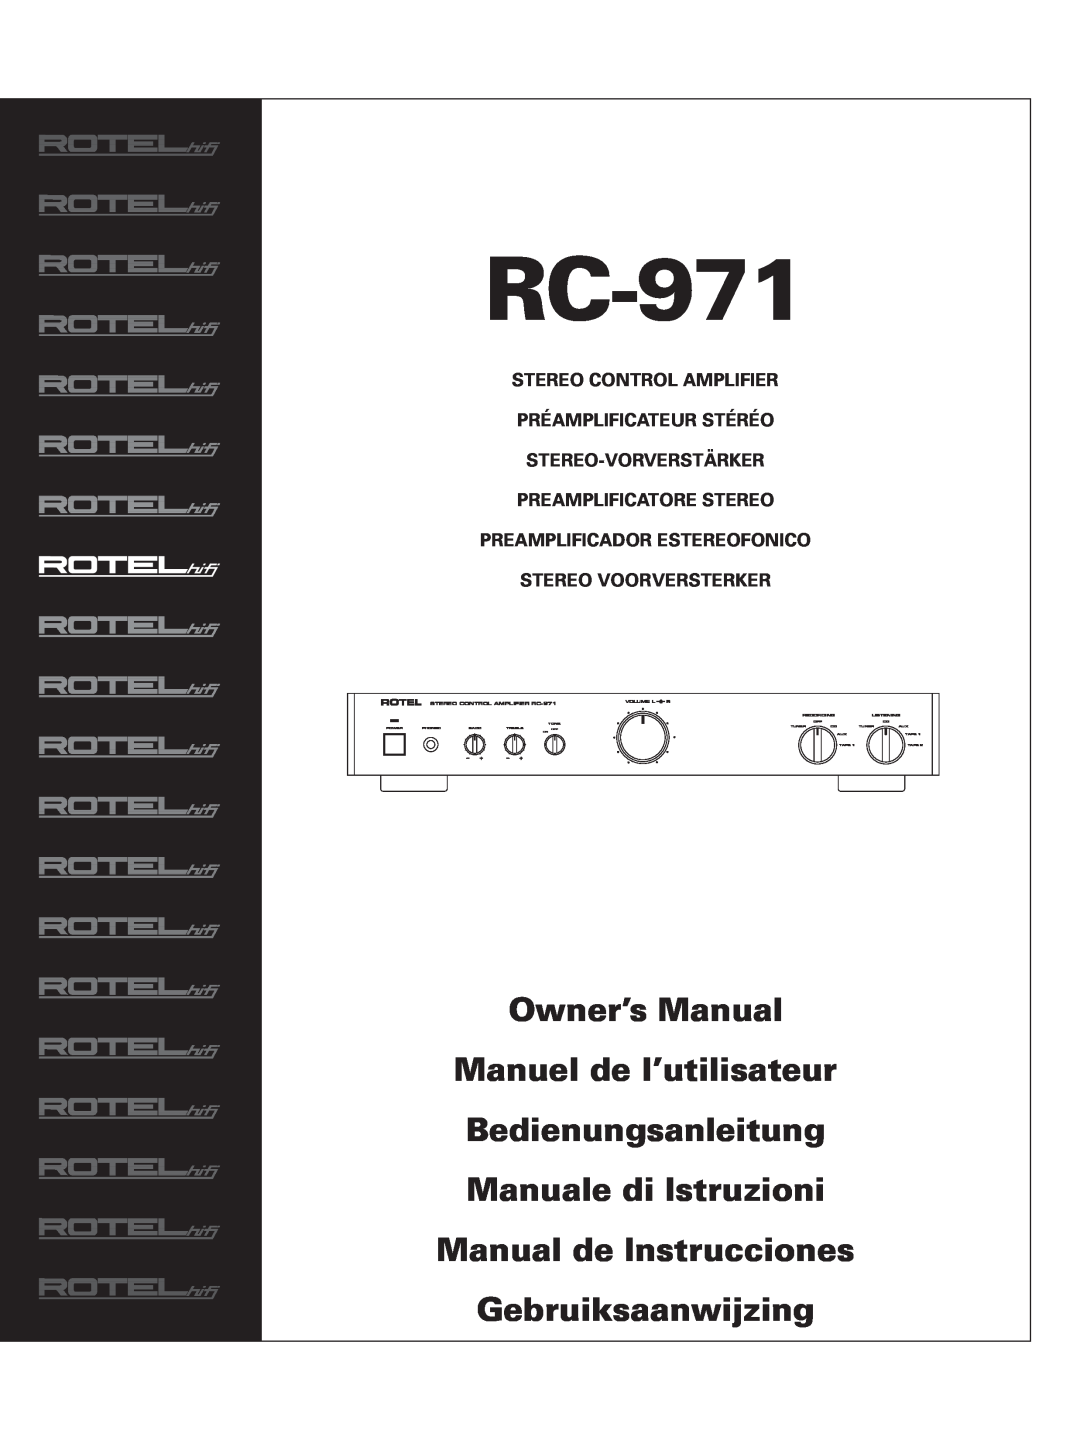 Rotel RC-971 owner manual Bedienungsanleitung Manuale di Istruzioni, Manual de Instrucciones Gebruiksaanwijzing, Tone 